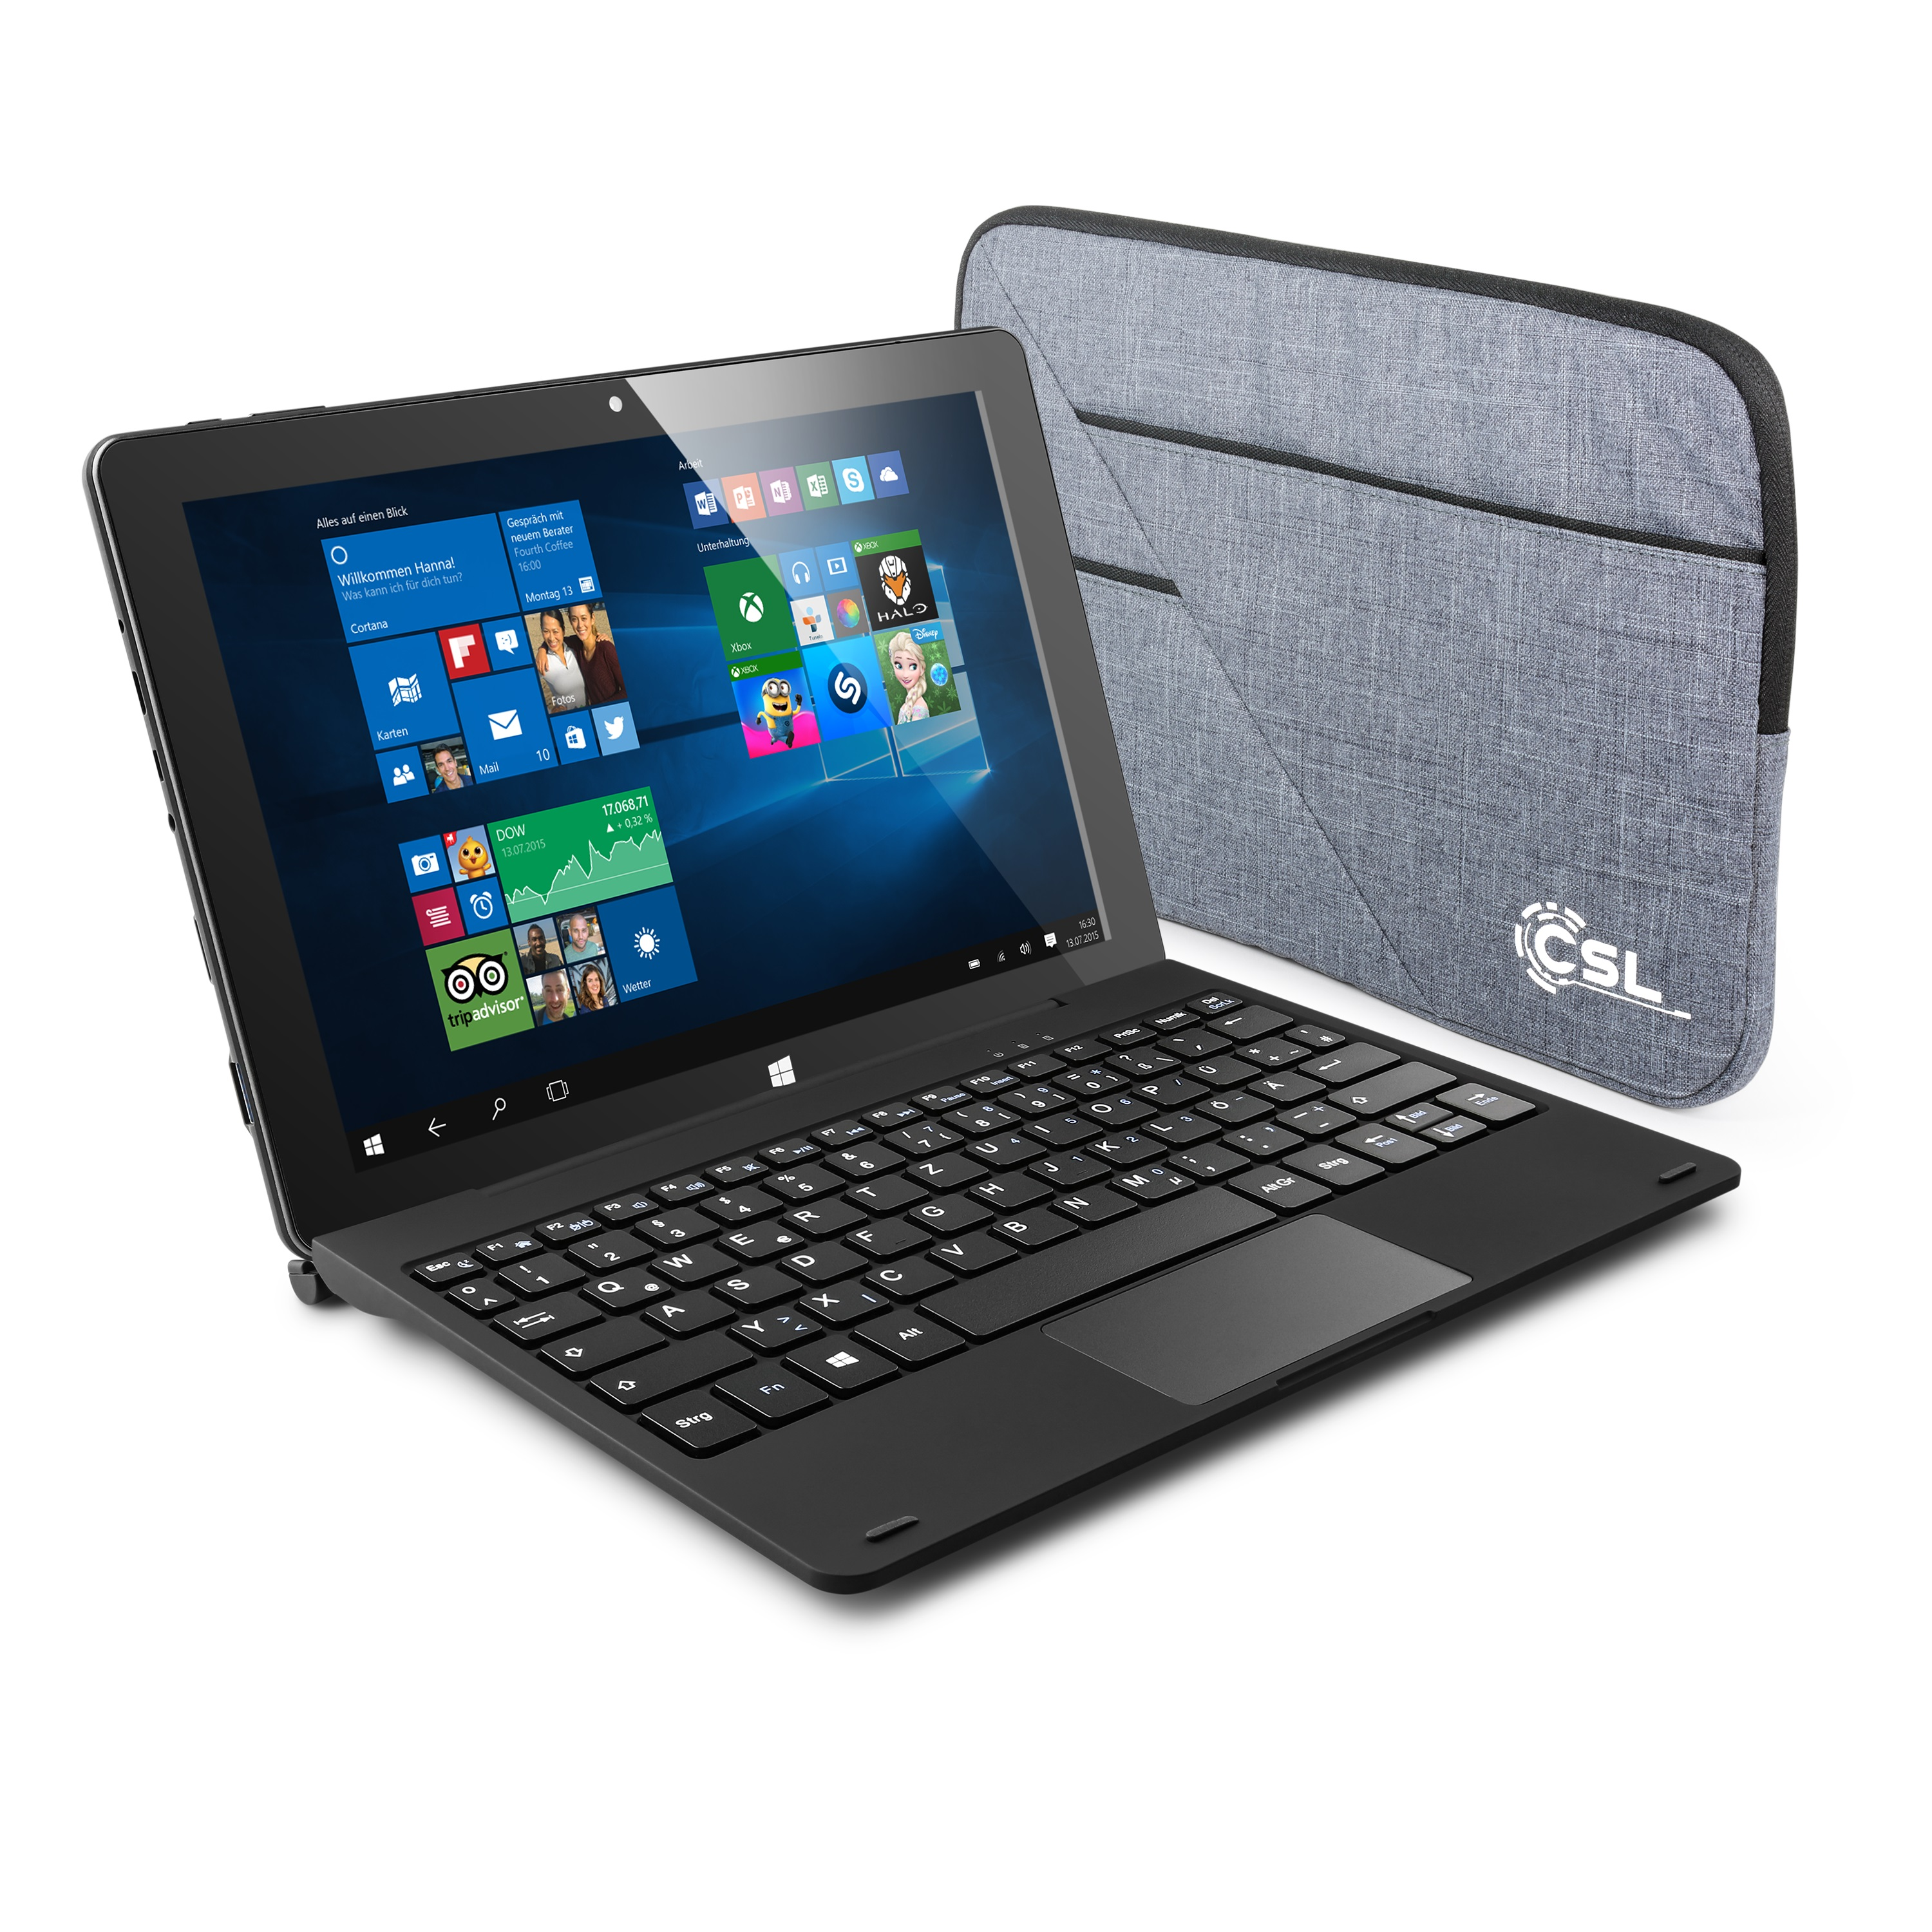 schwarz Tasche, HD GB, / Pro USB + 10,1 Tab 11 3.1 CSL GB Panther / 128 Zoll, Win Tablet, 512